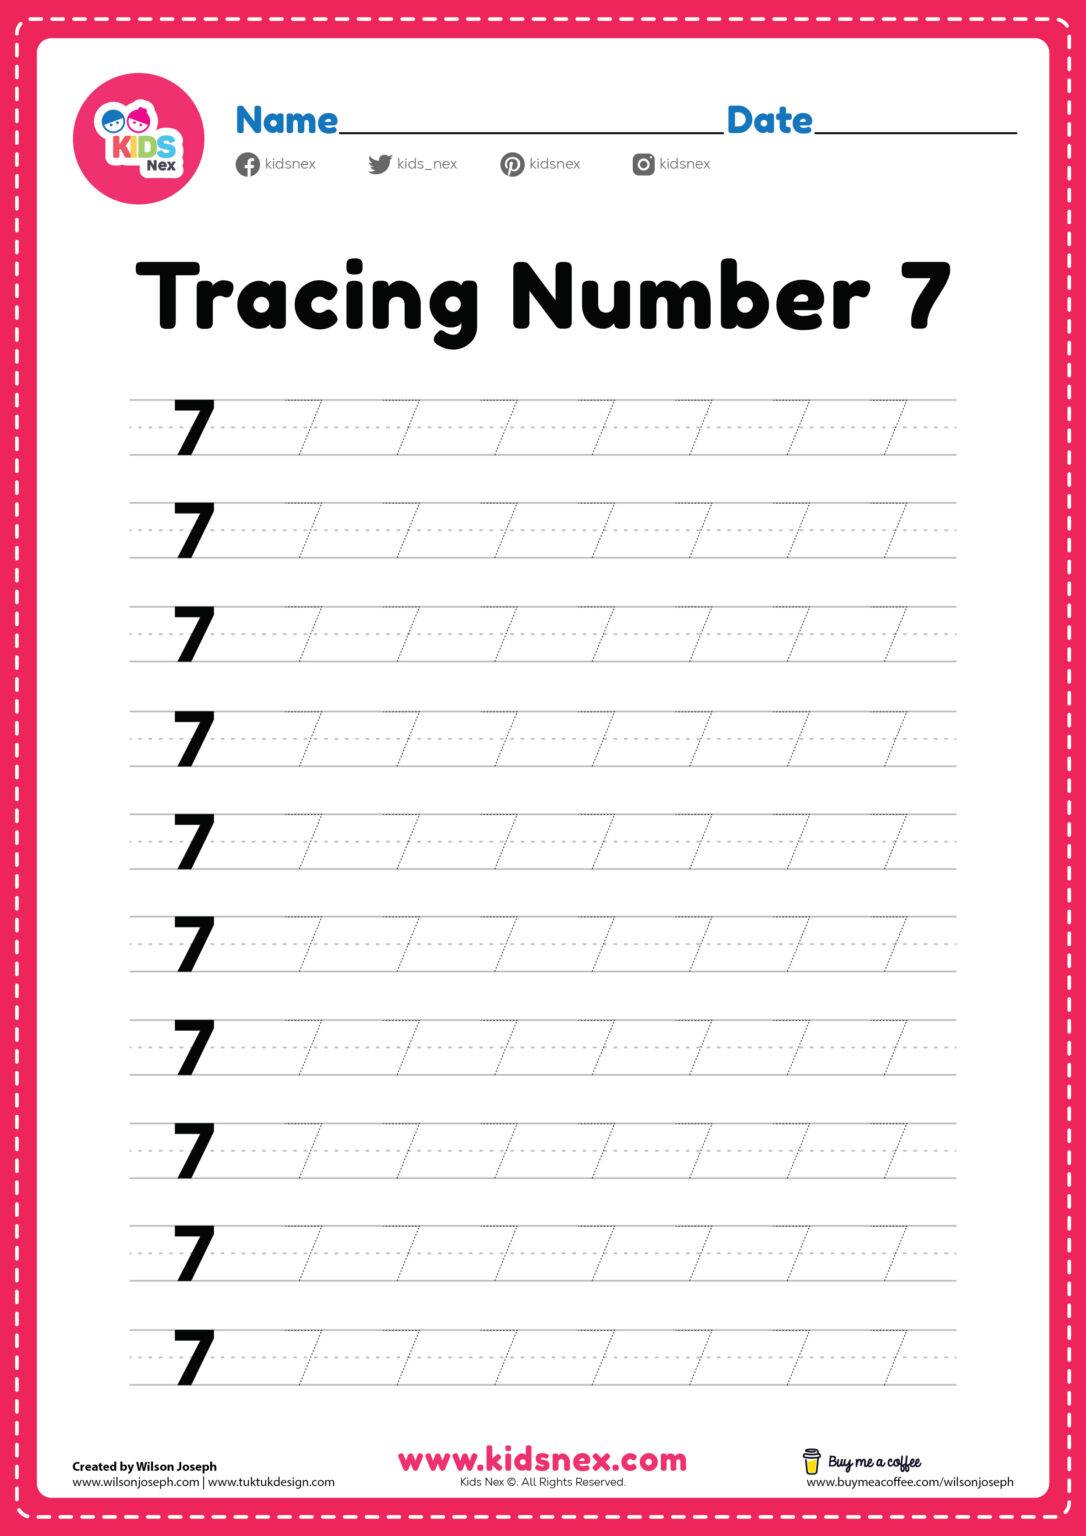 tracing-number-7-worksheet-free-printable-pdf-for-kids